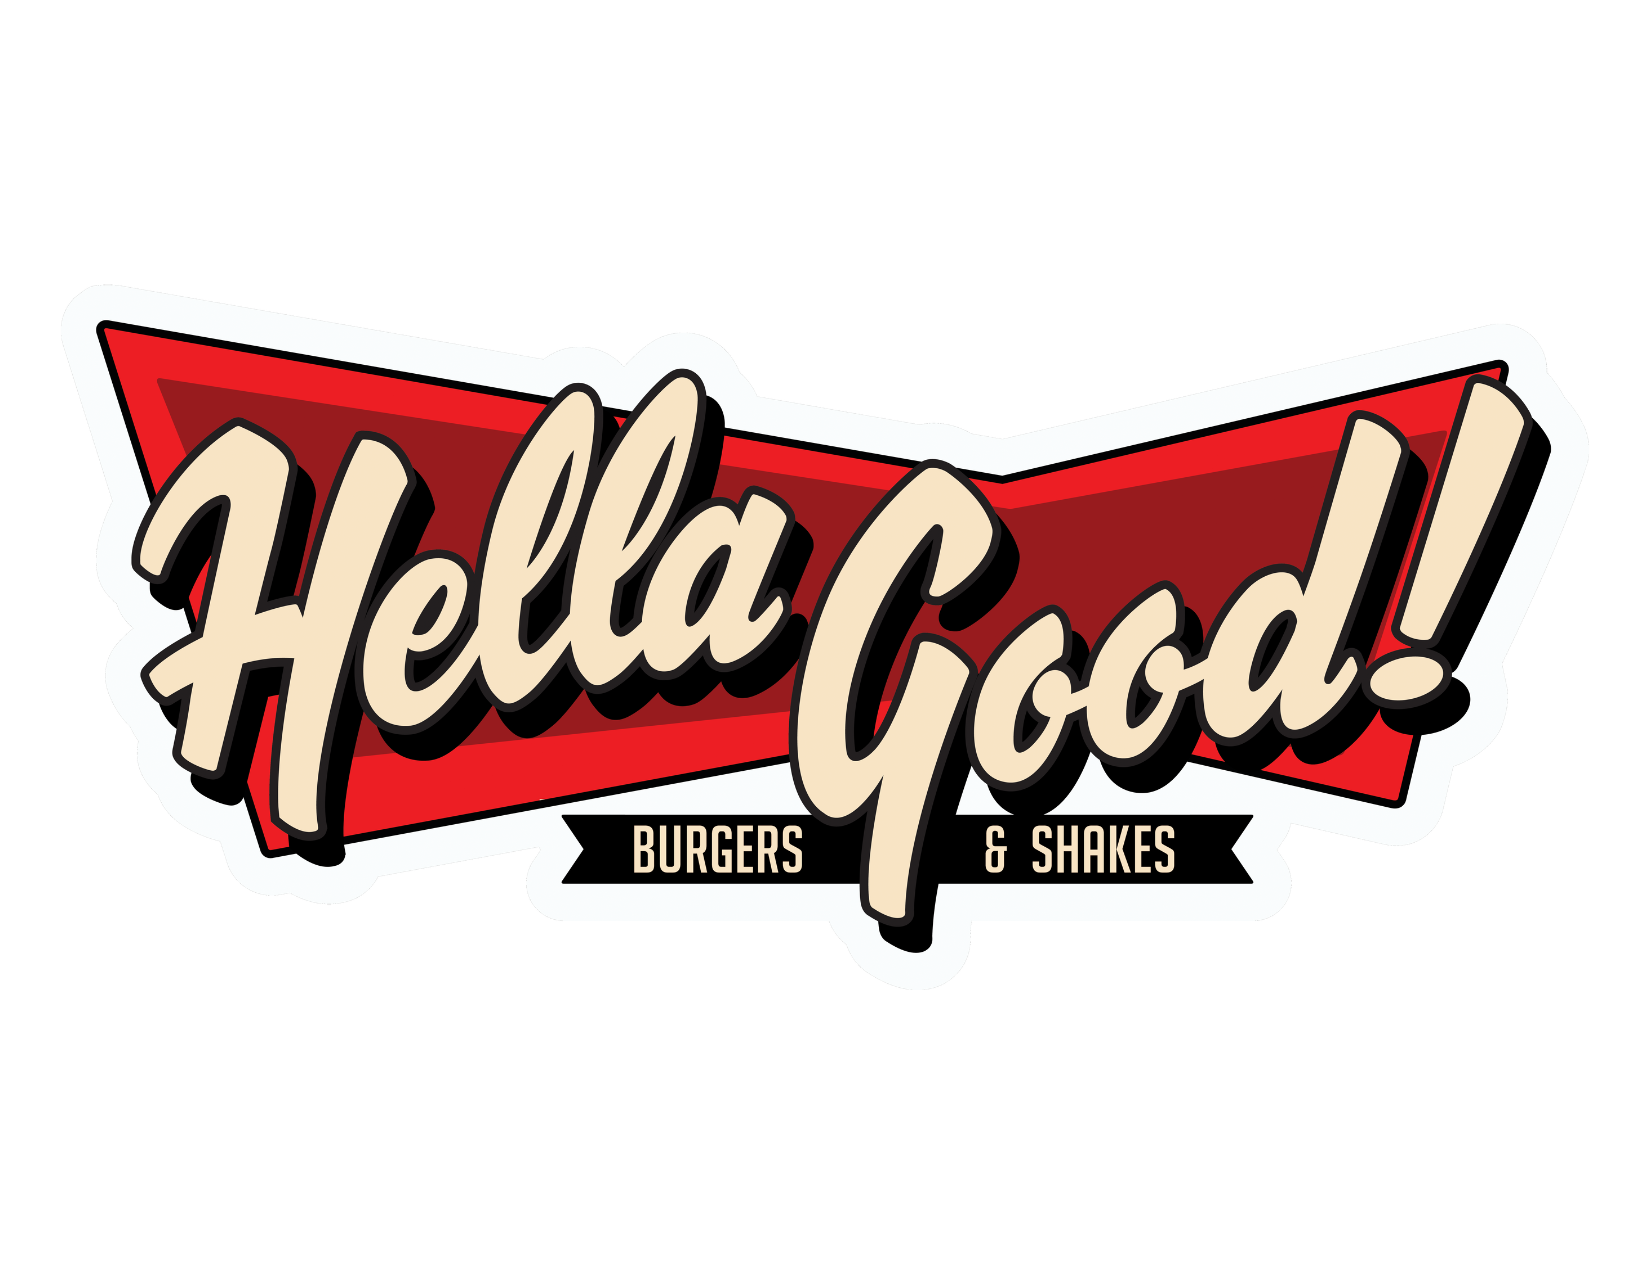 hella-good-burger.png